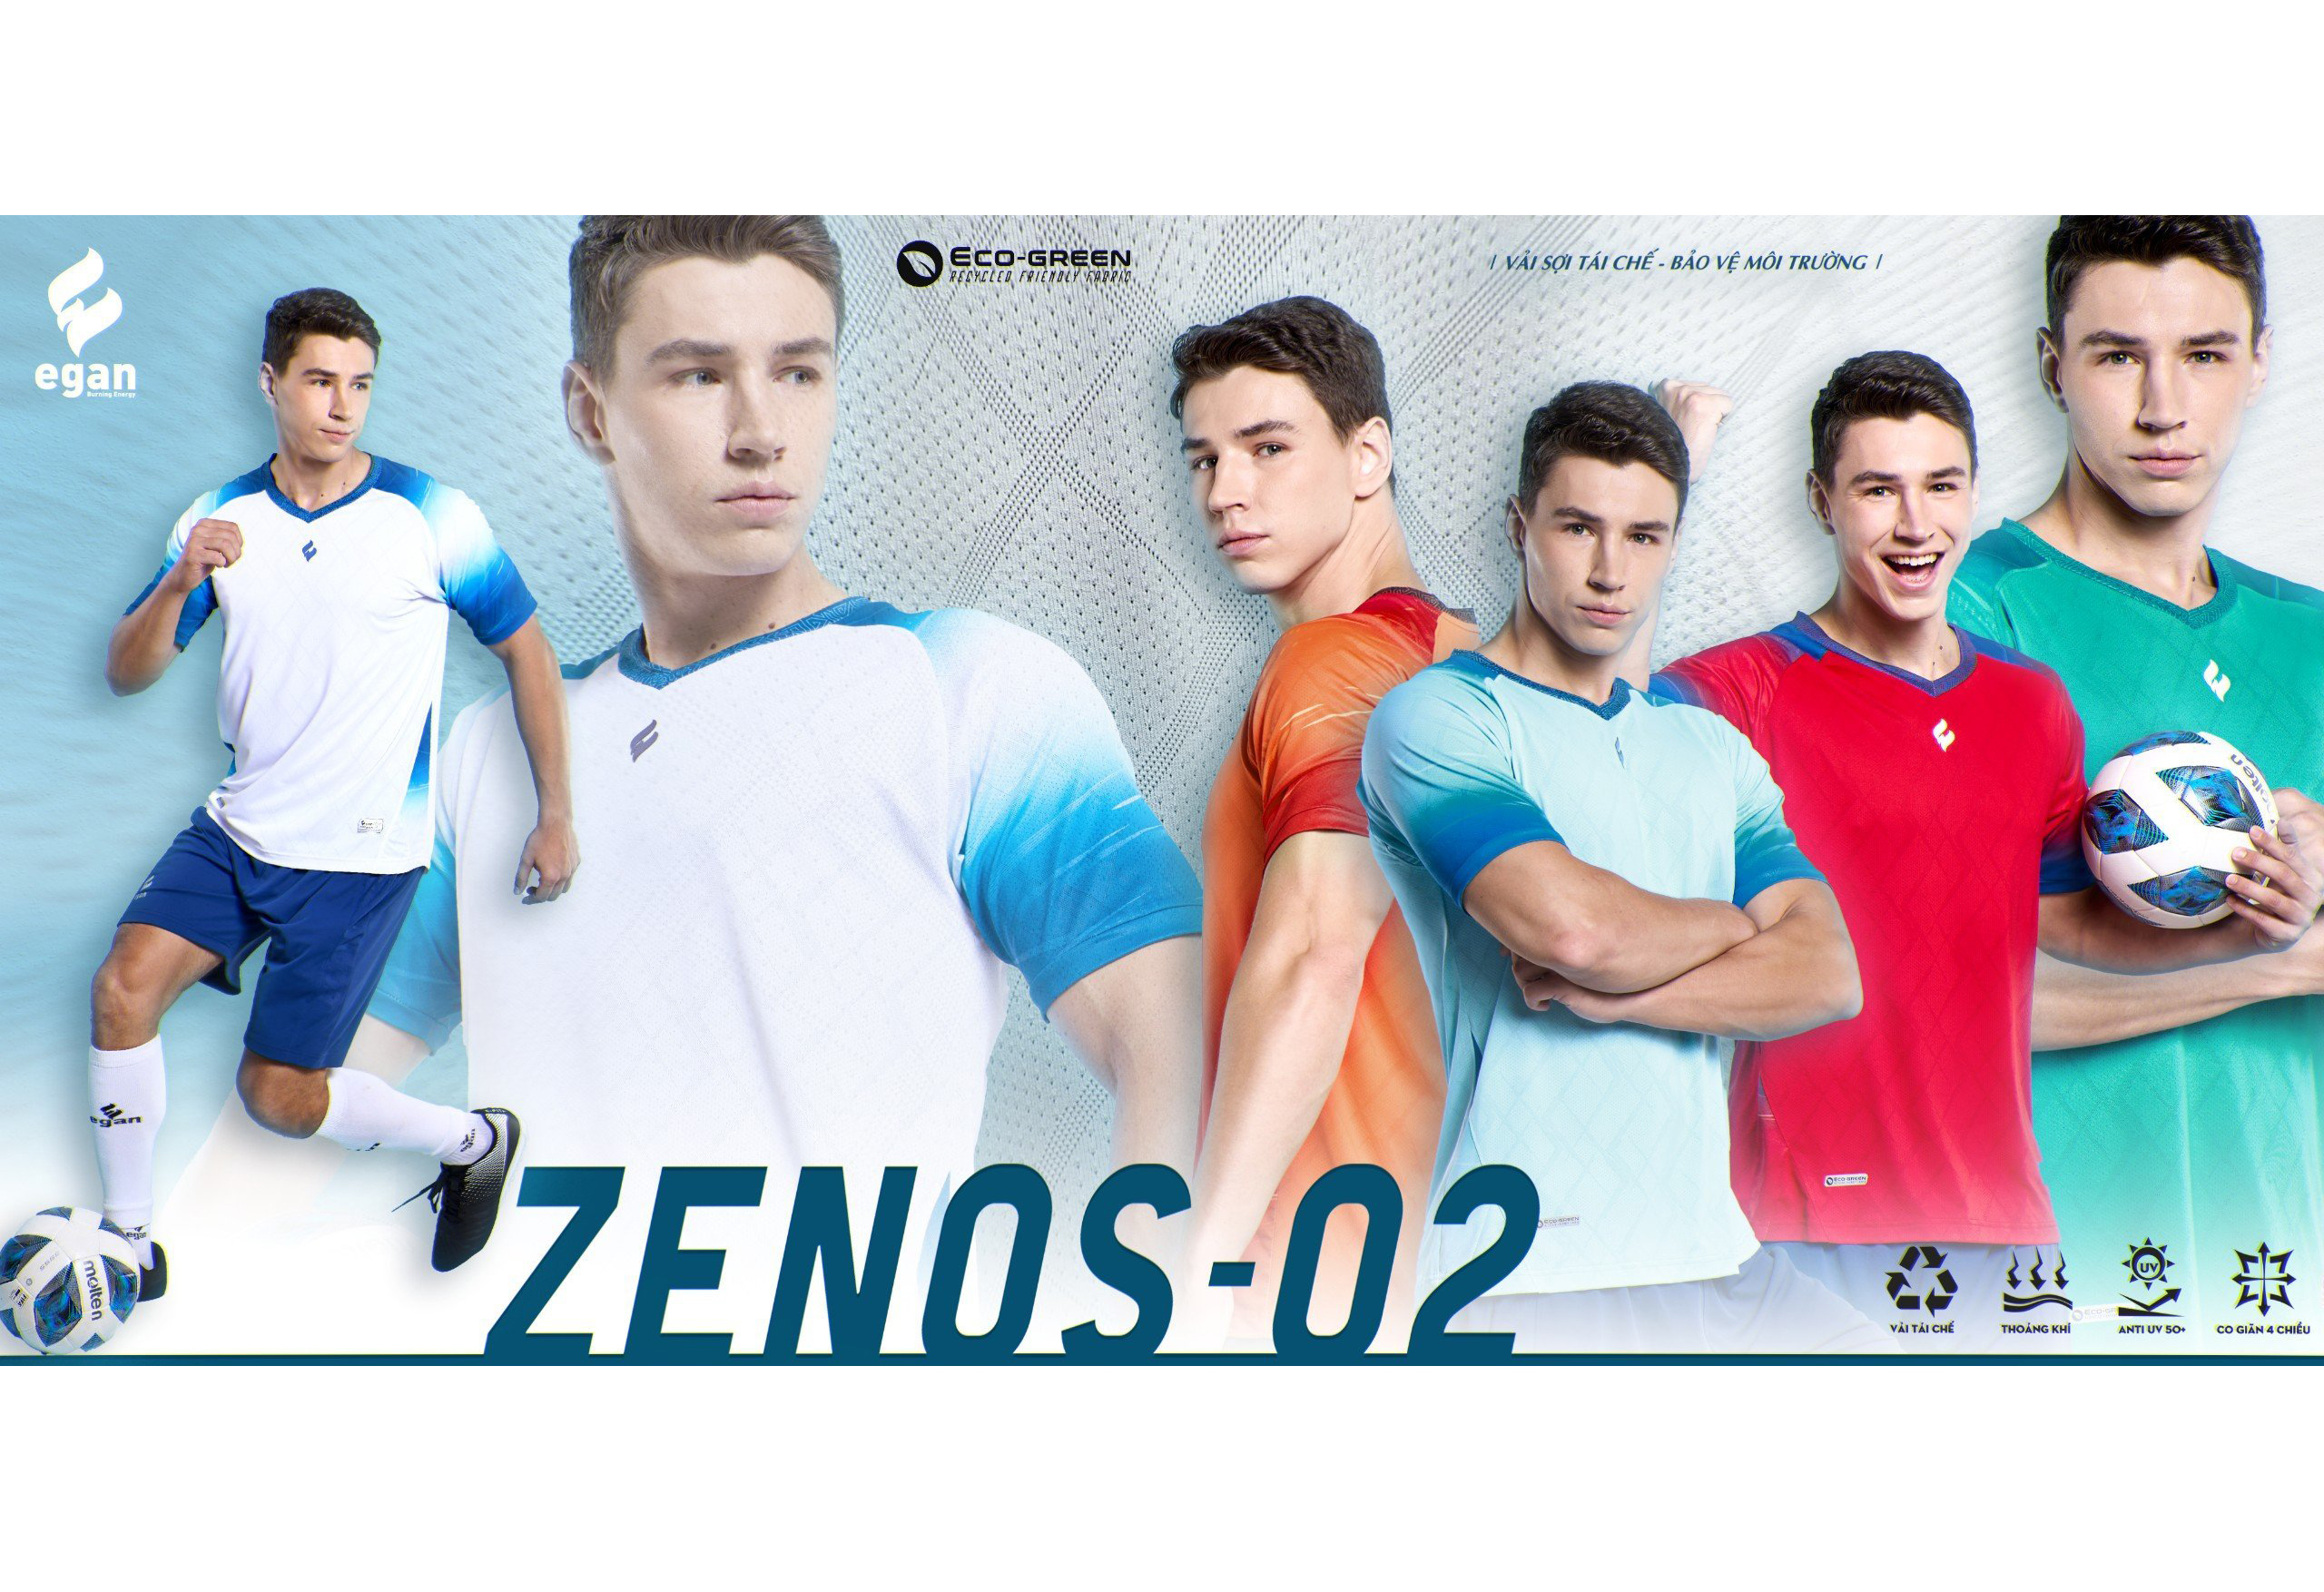 Quần áo bóng đá Egan Zenos 2